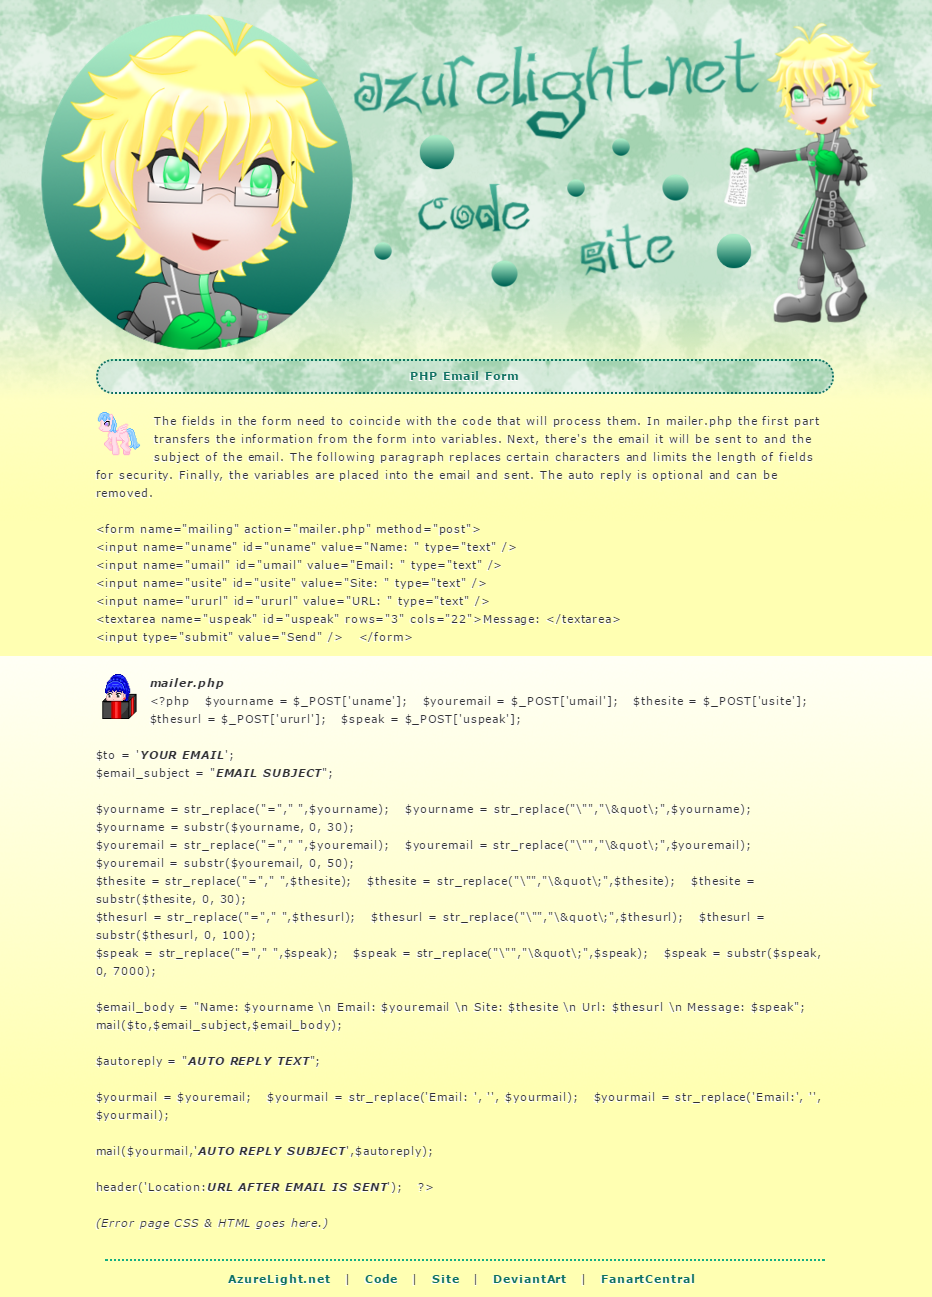 updated: email form by AzureMikari